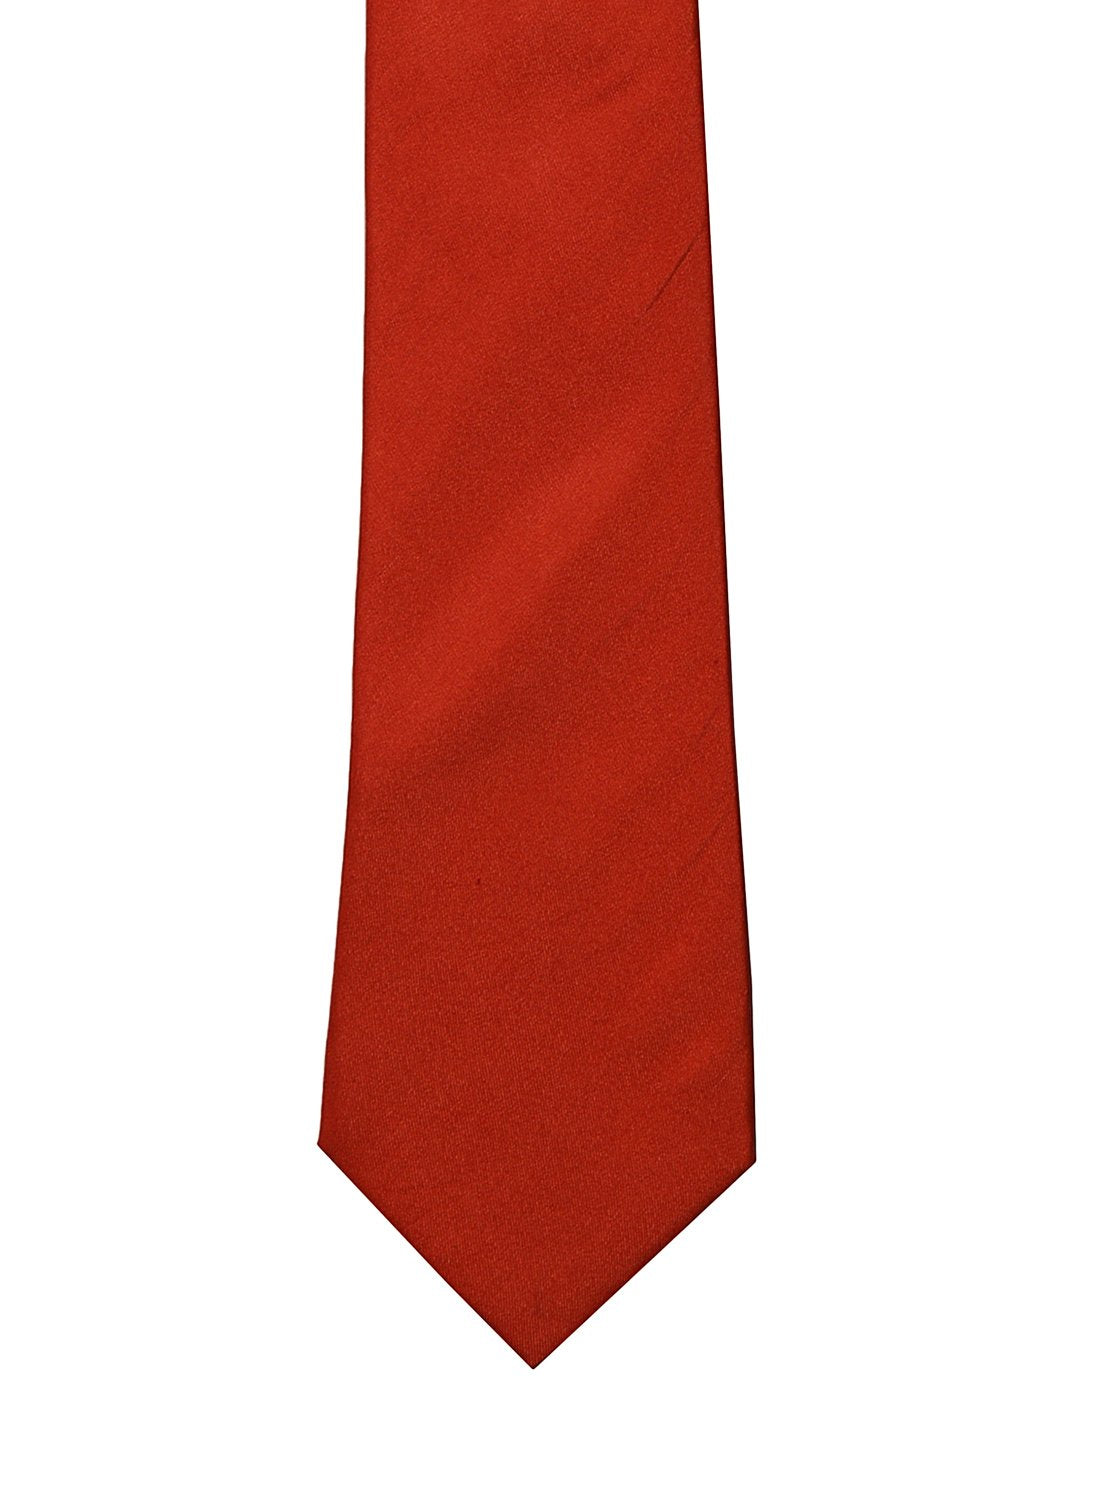 Chokore Red Color Silk Tie for men